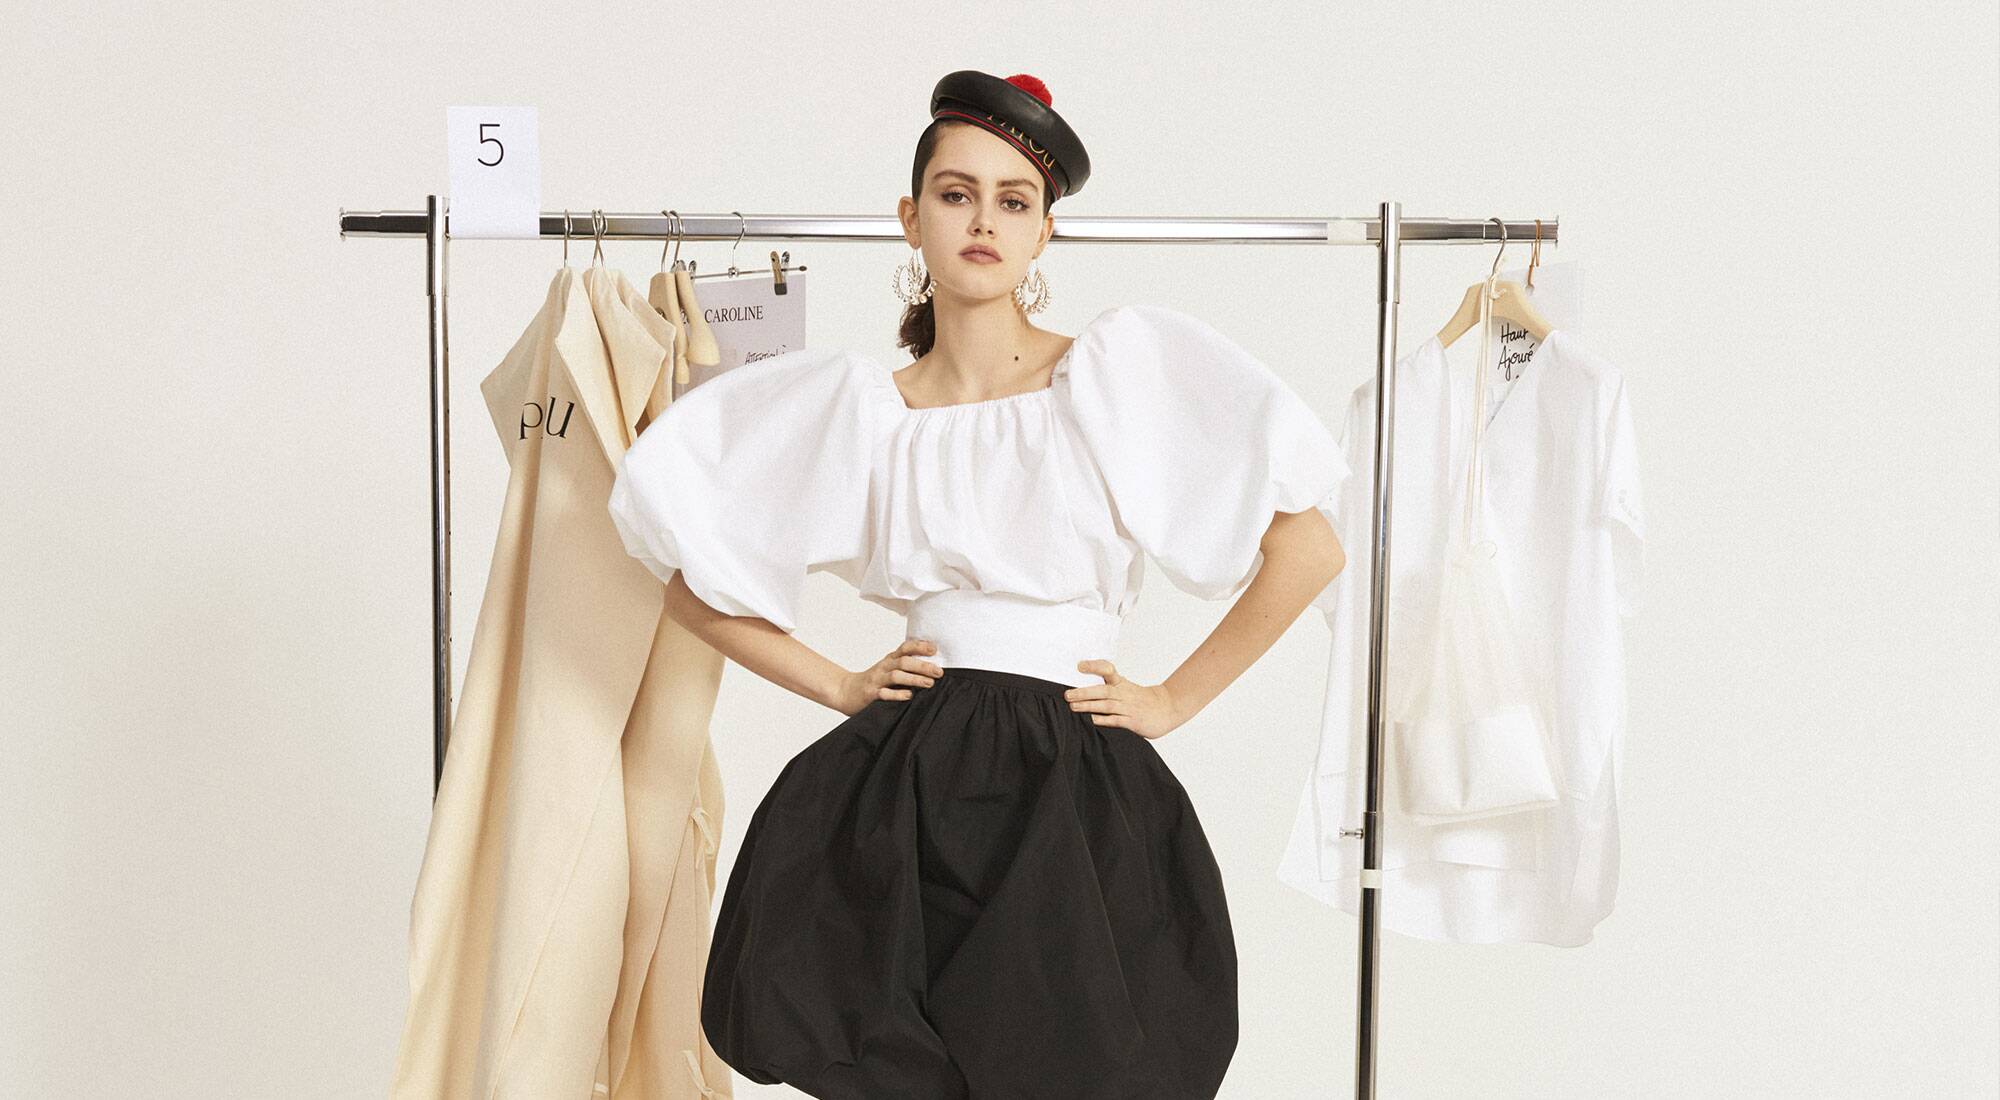 From Milan to Paris, LVMH Fashion Maisons unveil women's